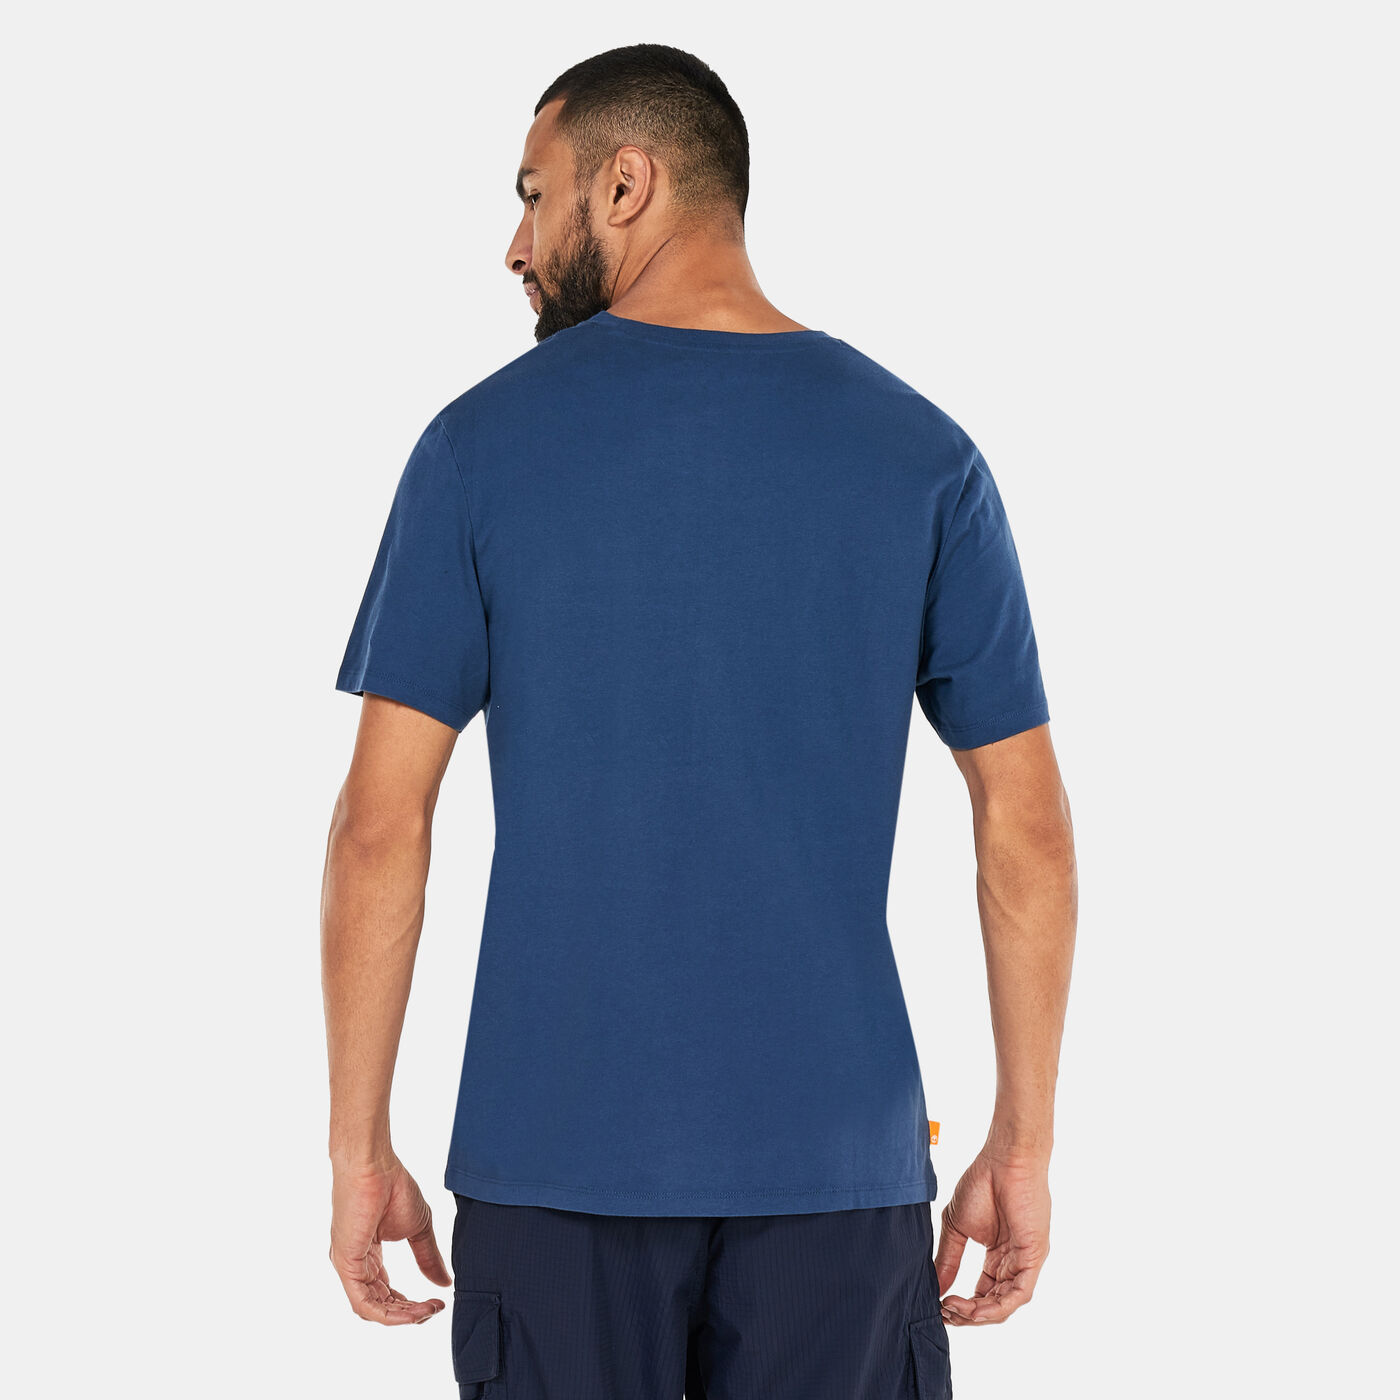 Men's Tree Camo Graphic T-Shirt